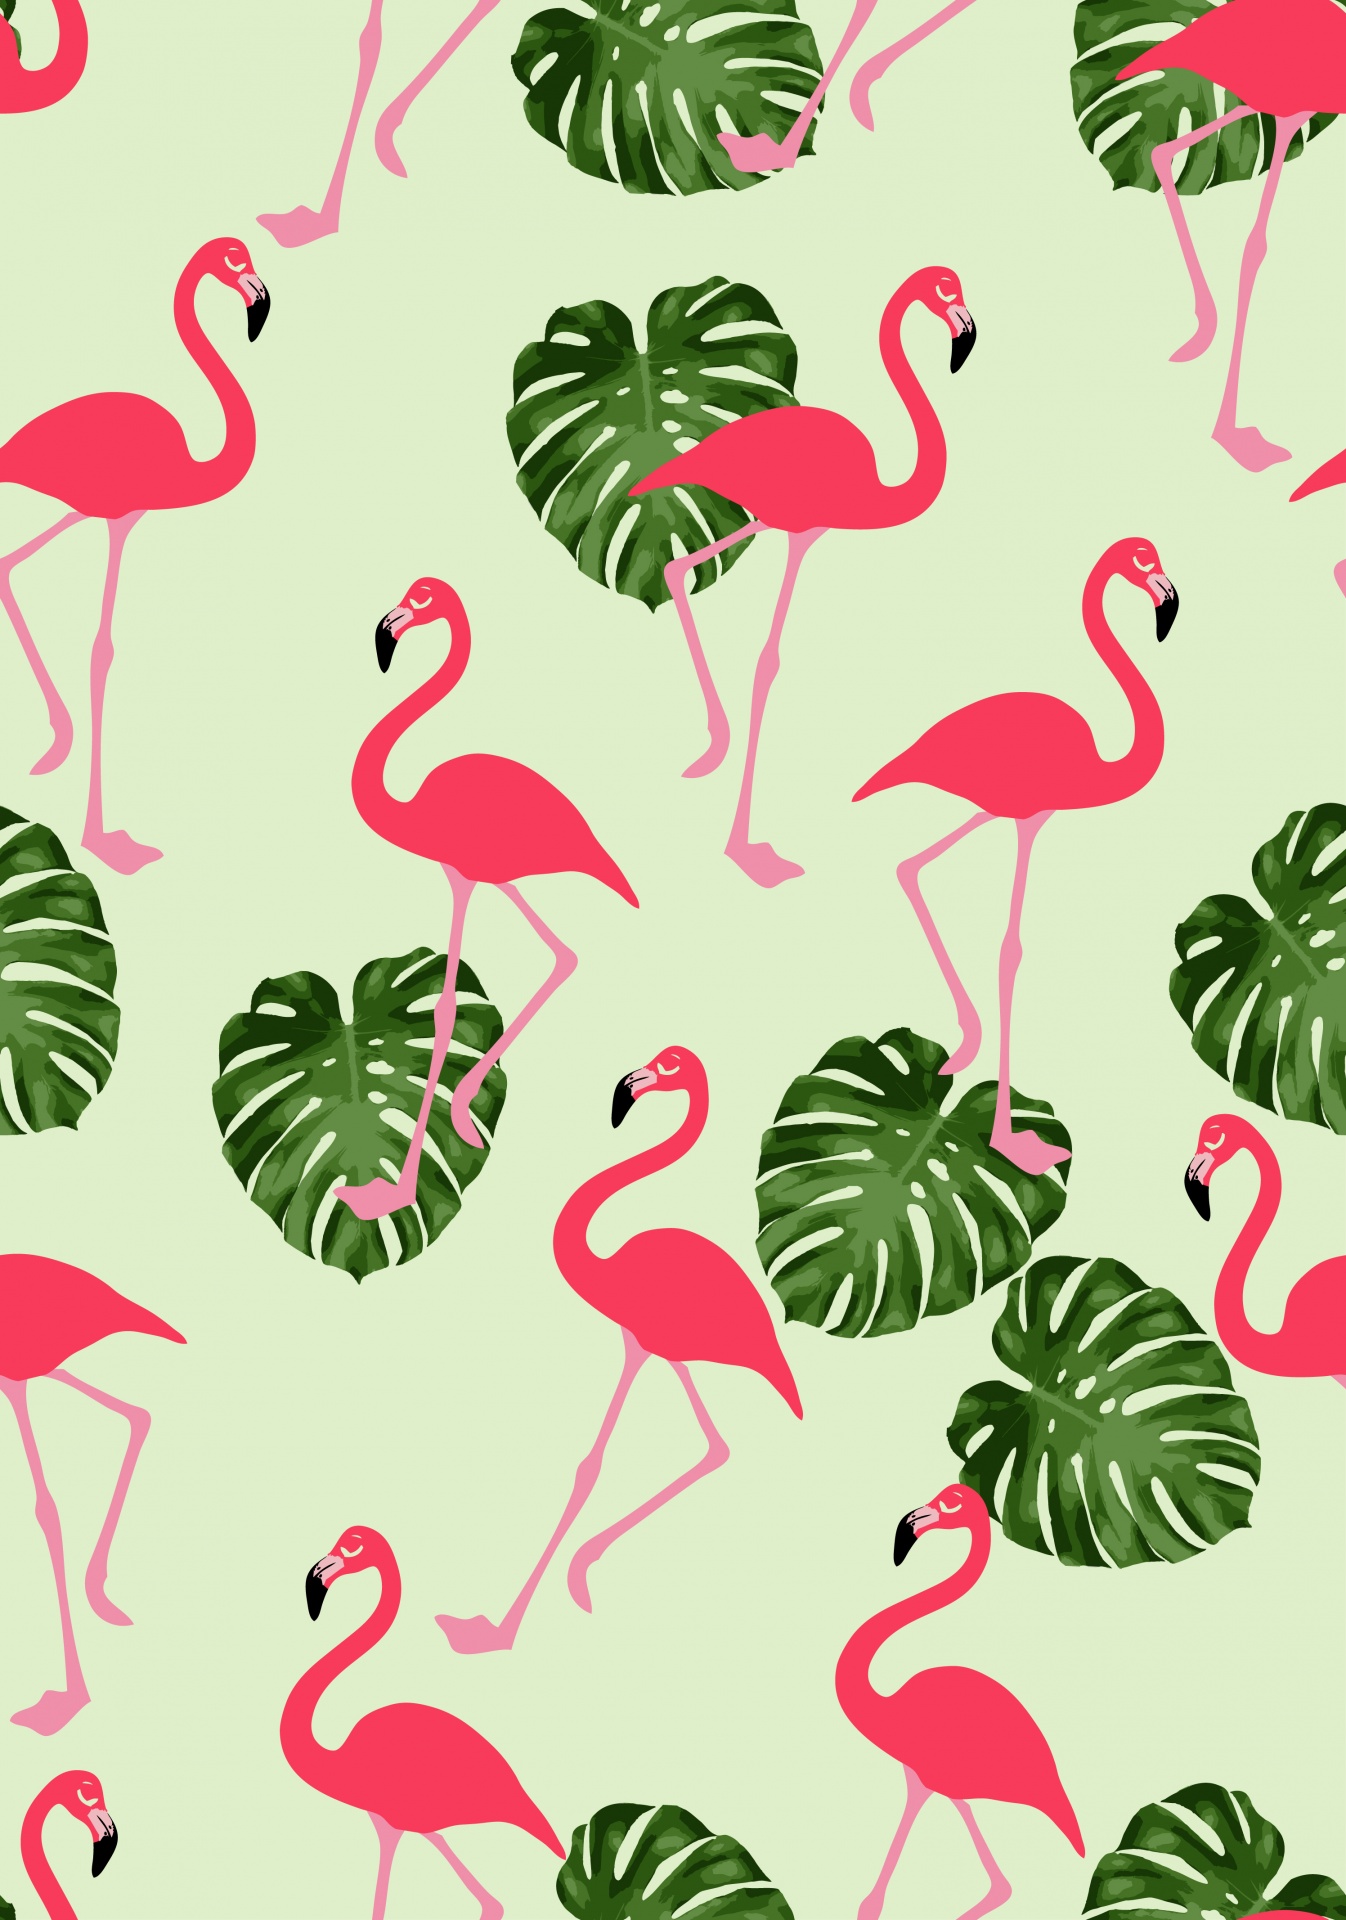 Flamingo group mural wallpaper  TenStickers